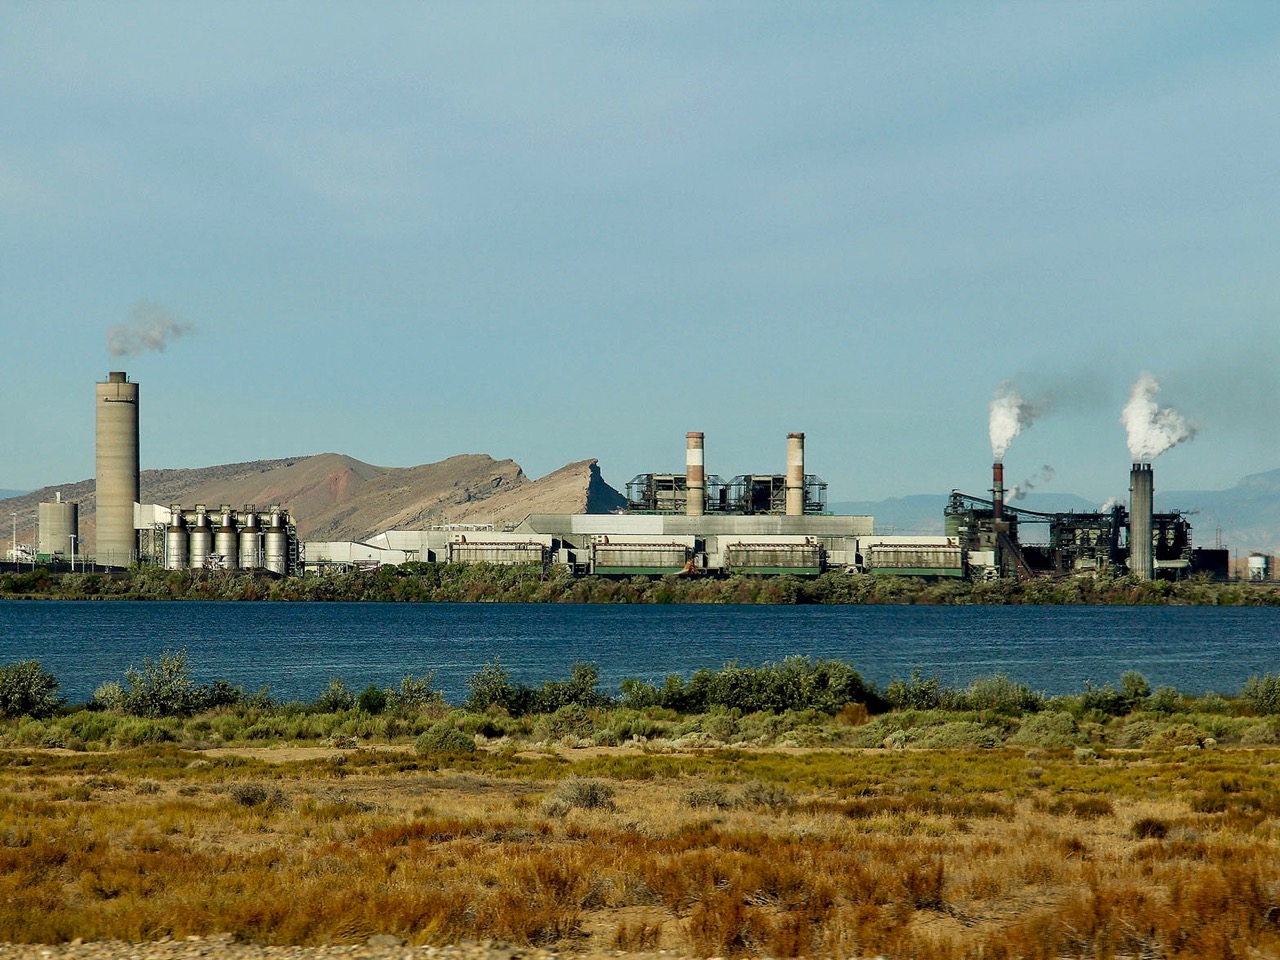 Cronkite News: Environmental groups lose challenge to tribal coal mine